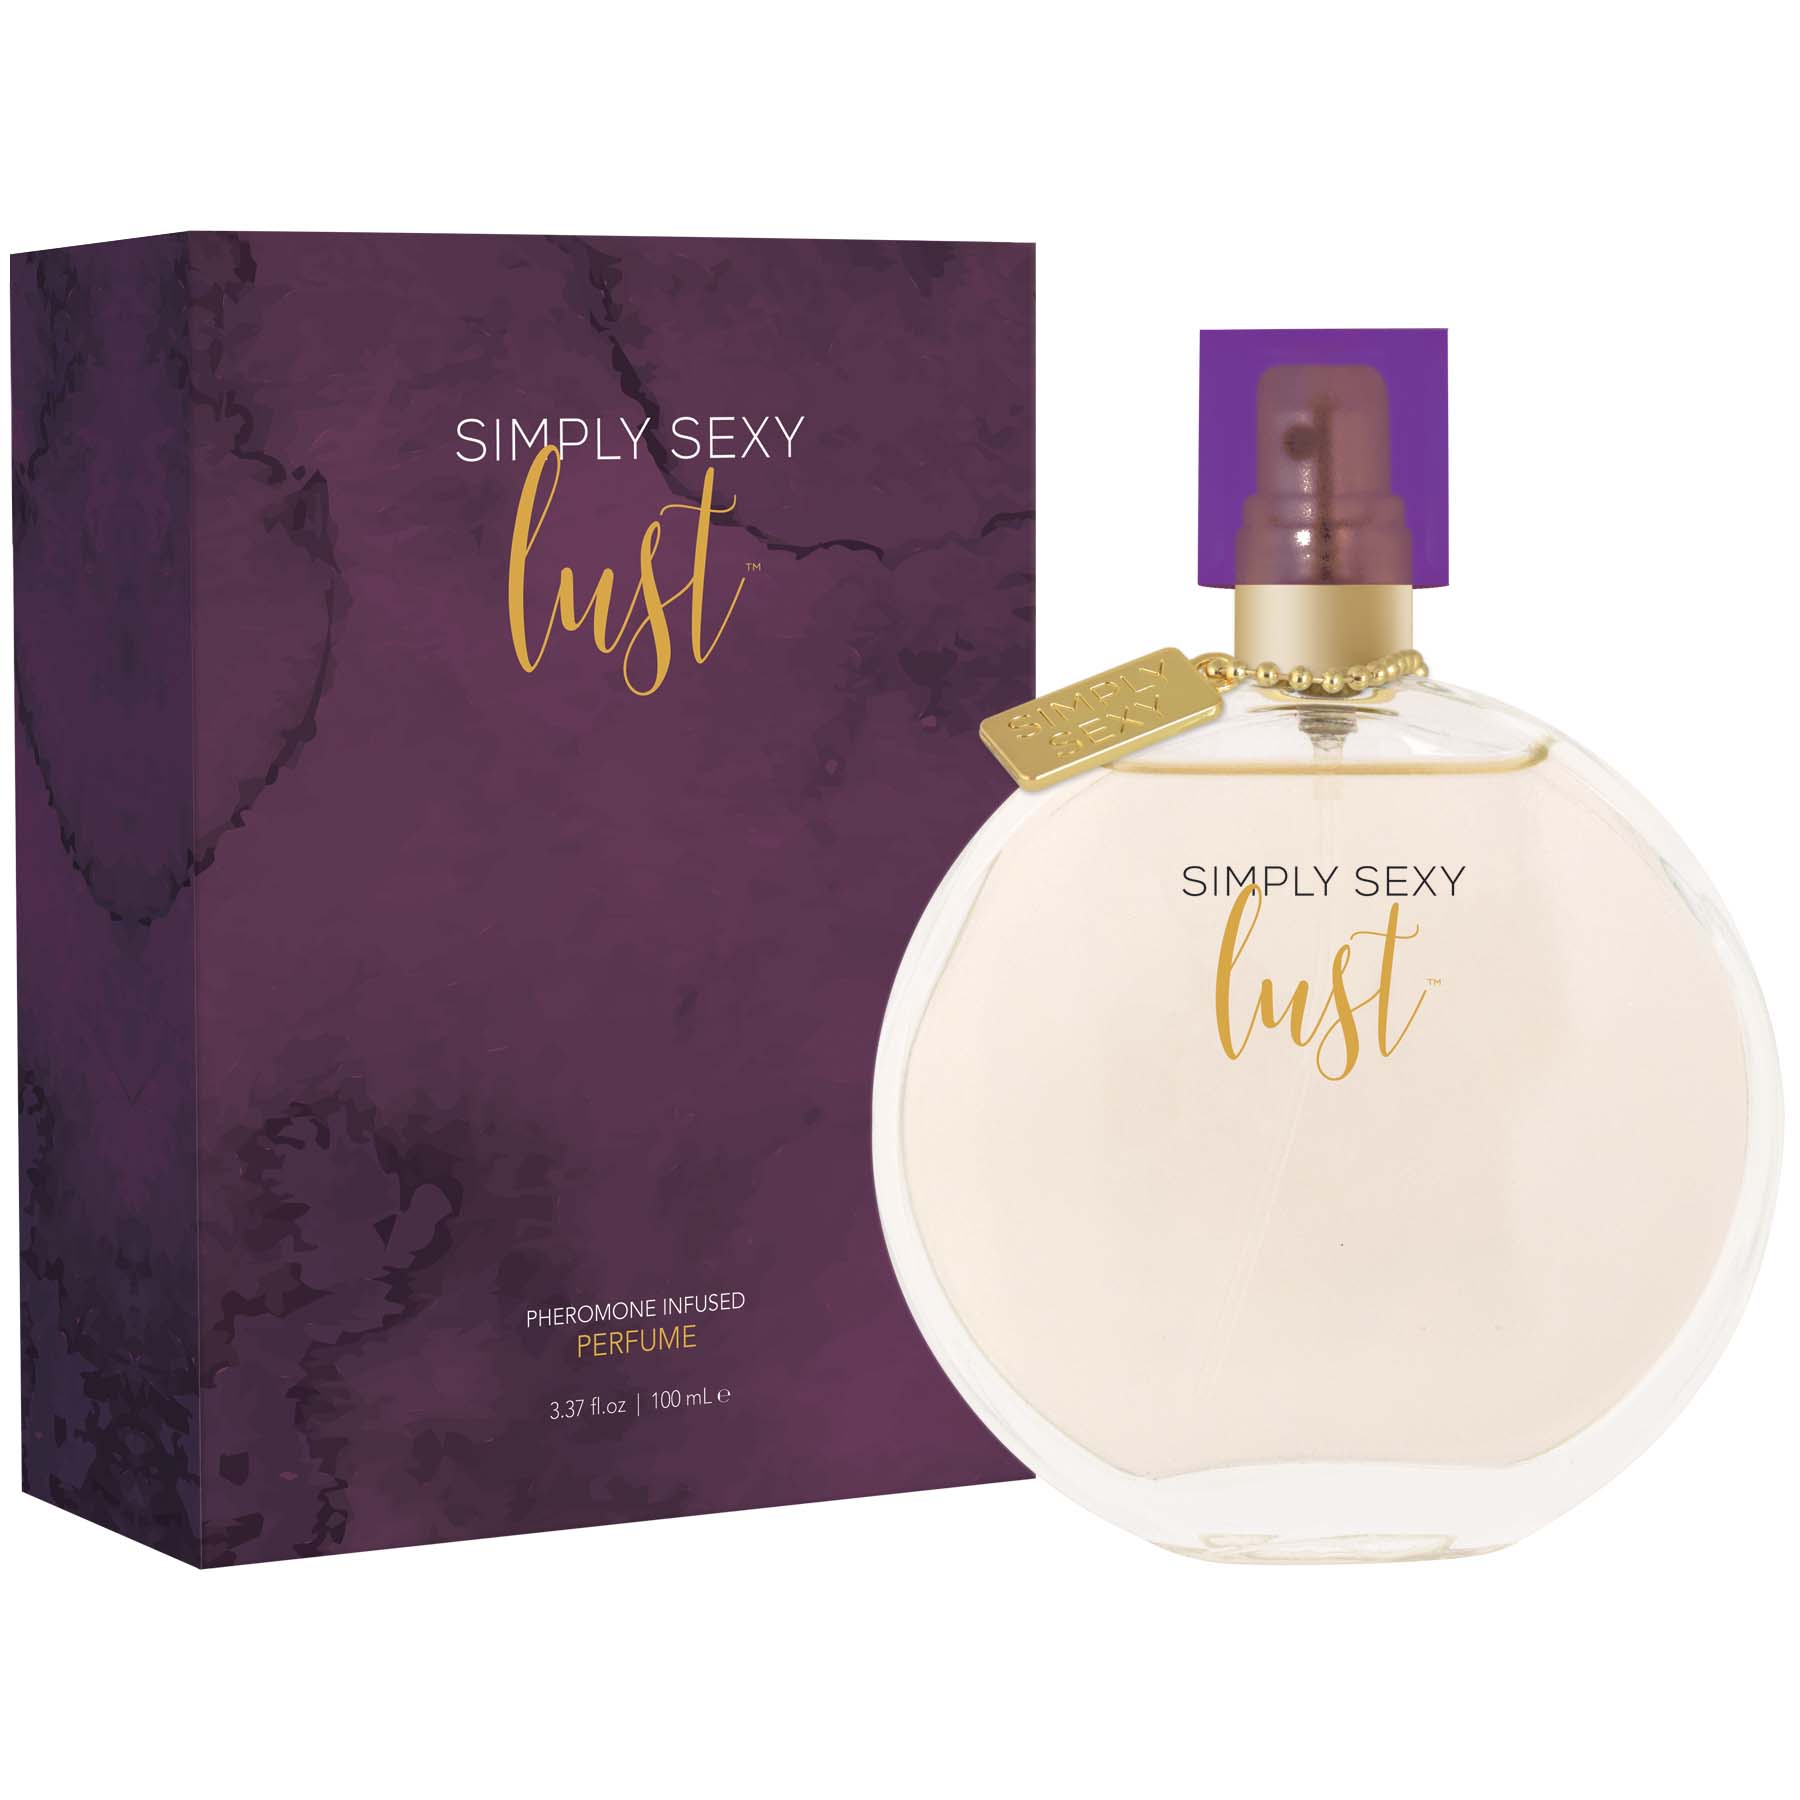 Simply Sexy Lust Pheromone Infused Perfume - 100 ml